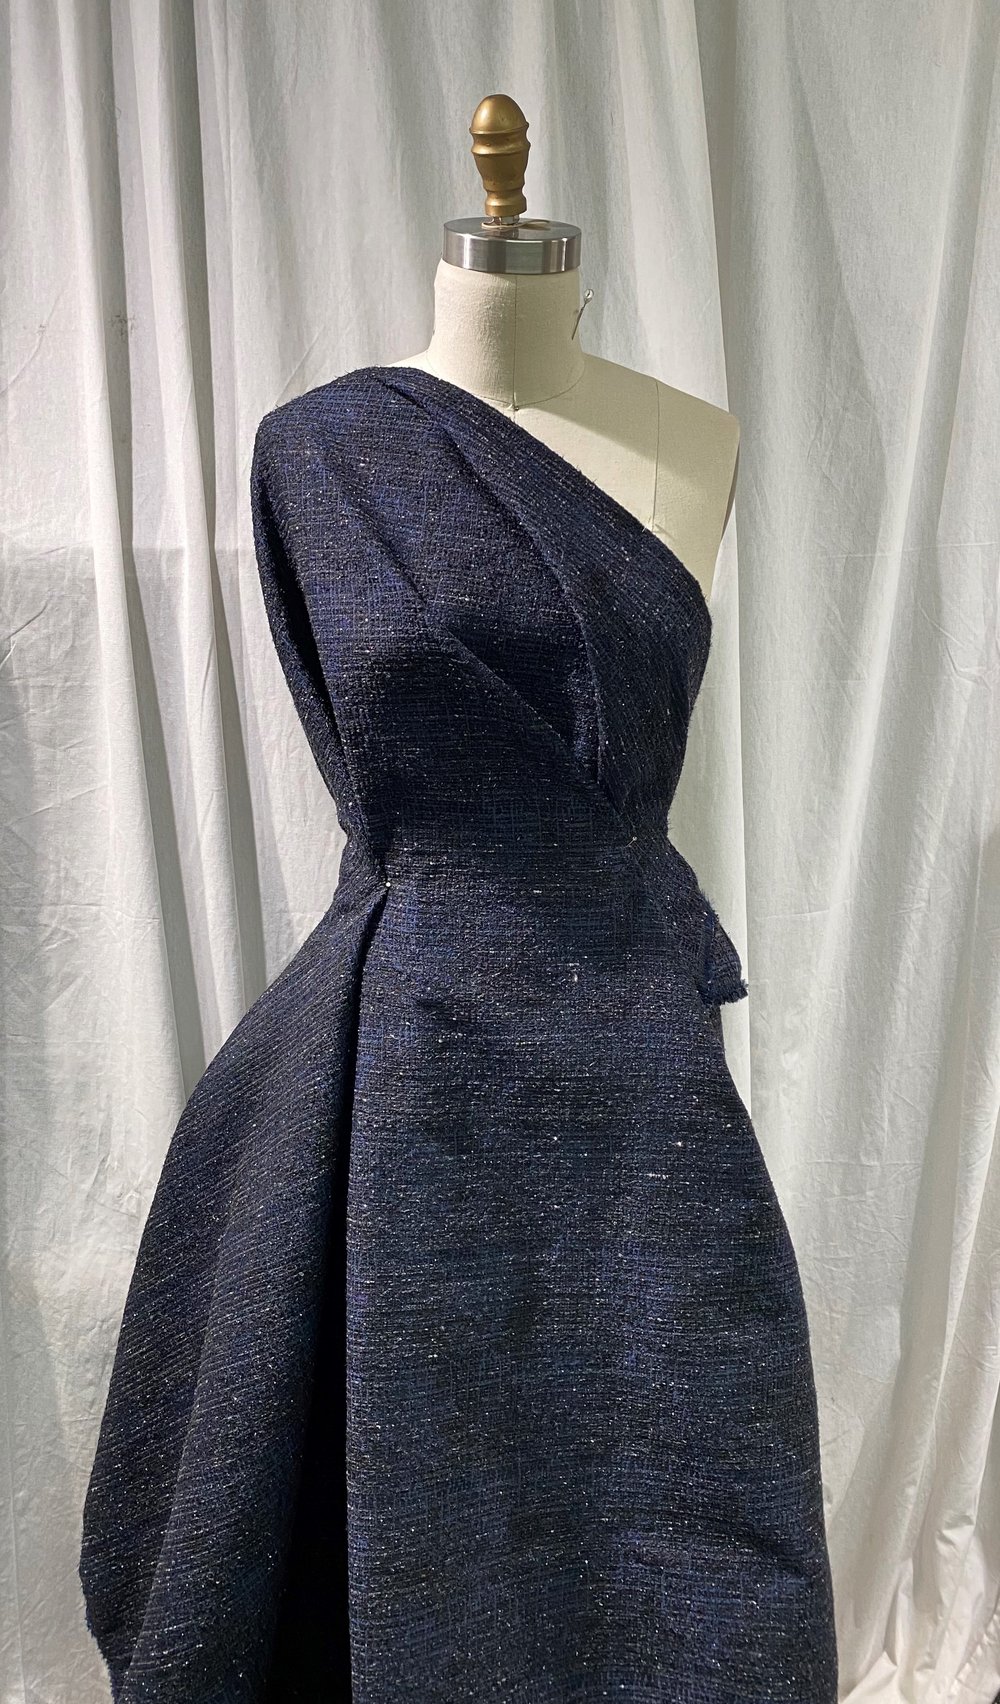 Navy Lace and Sequin Trim — Mendel Goldberg Fabrics NYC